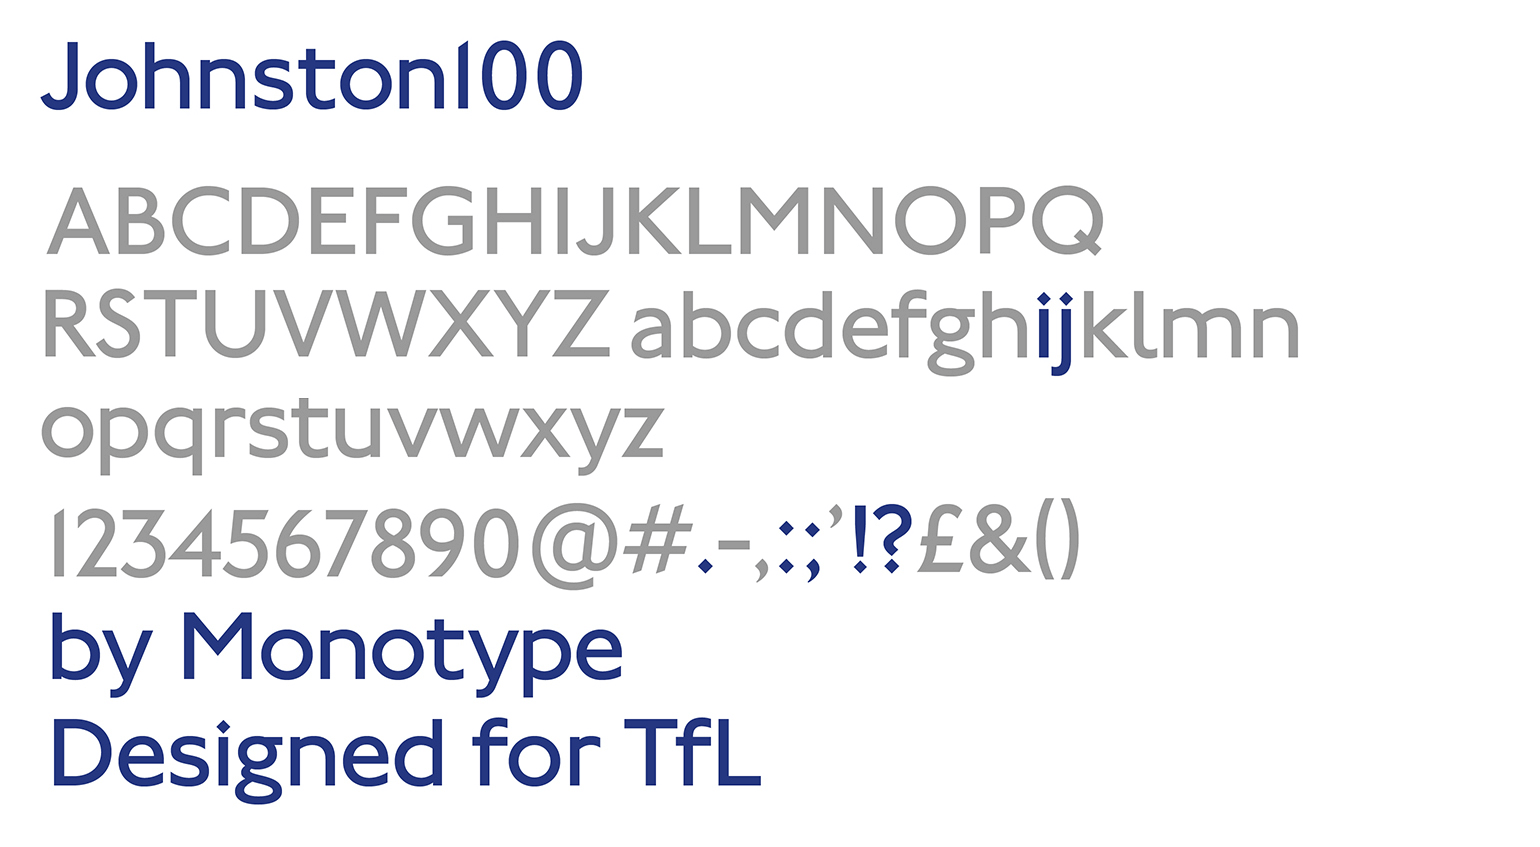 London Underground johnston font 100